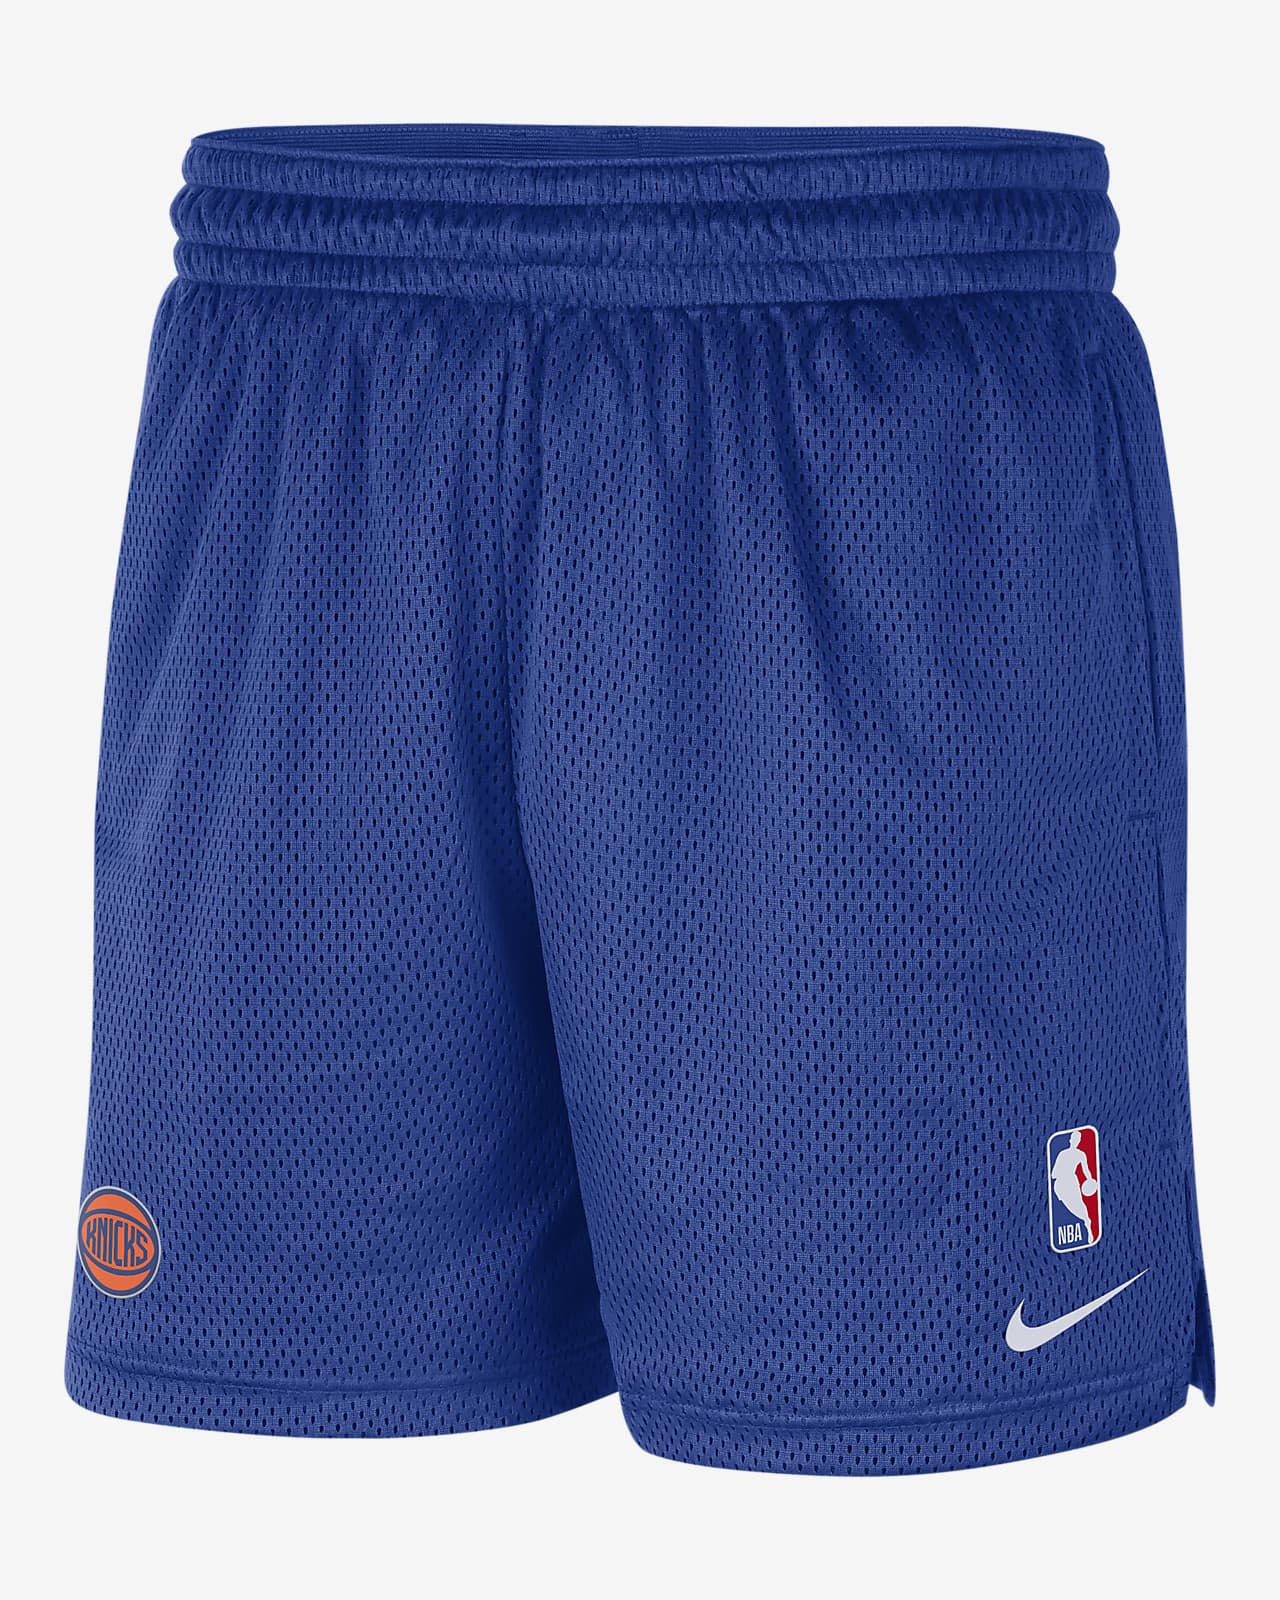 Shorts Nike NBA para hombre New York Knicks